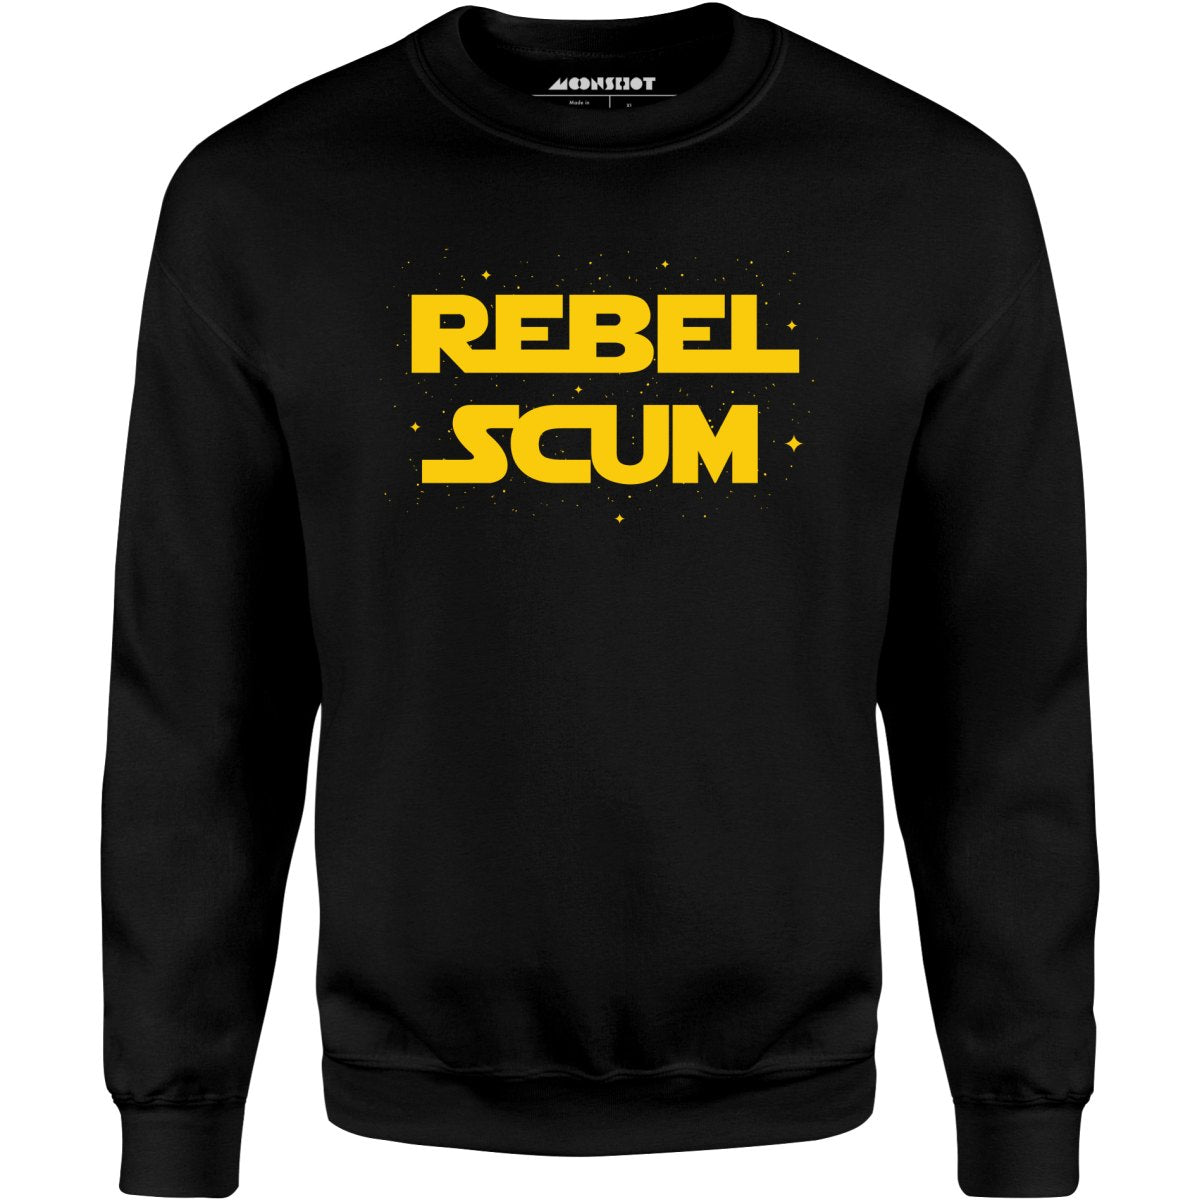 Rebel Scum - Unisex Sweatshirt